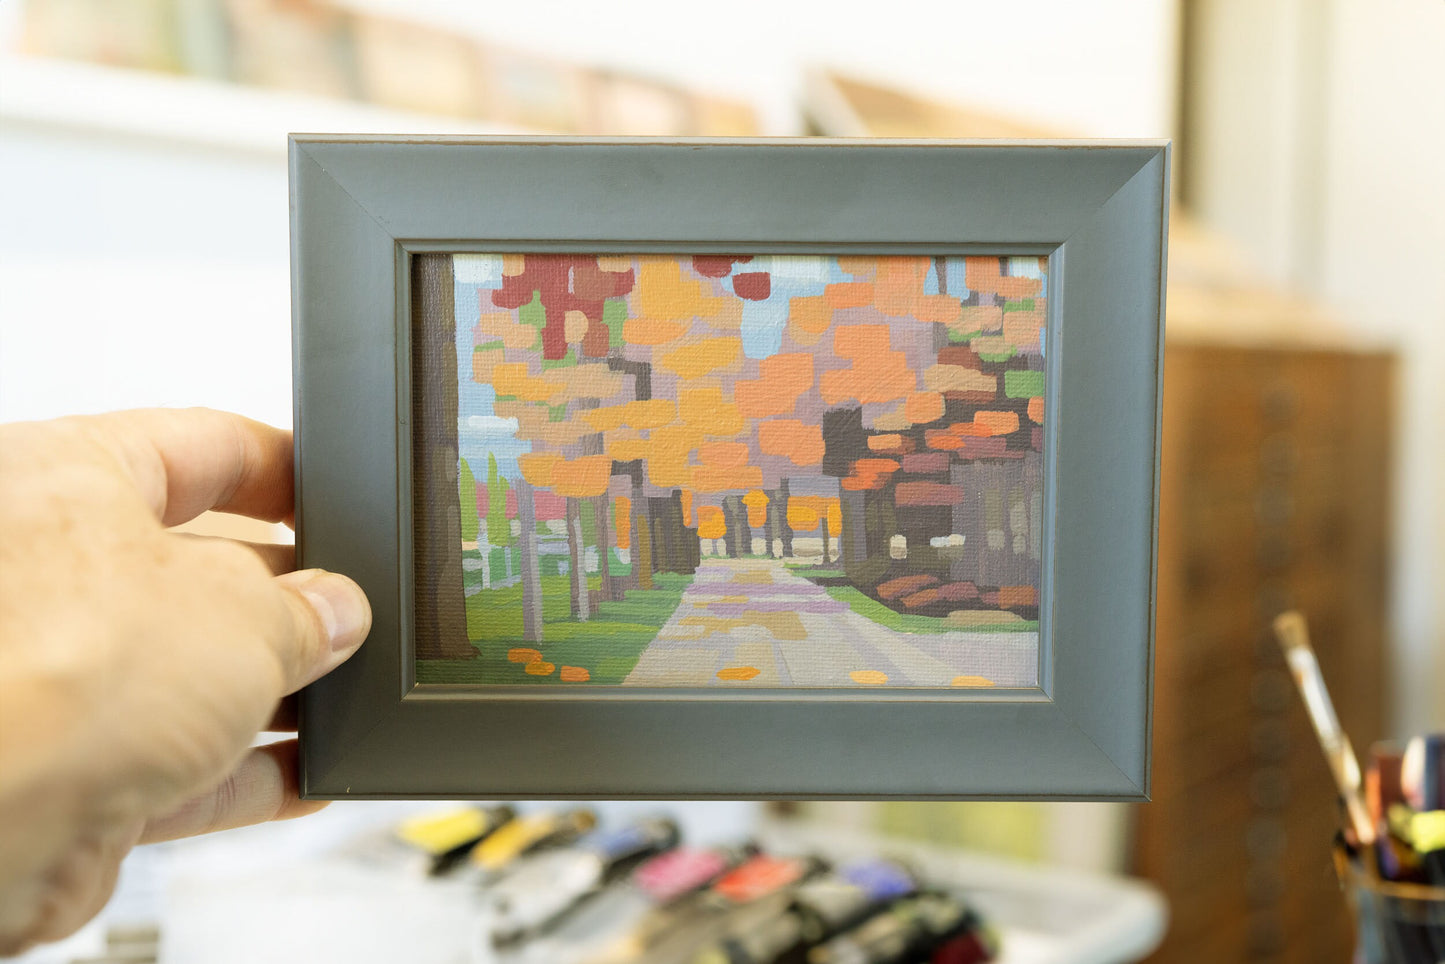 Original painting - "Autumn Sun" - hand painted - acrylic painting - 10x15 cm - landscape picture - unique piece - with frame